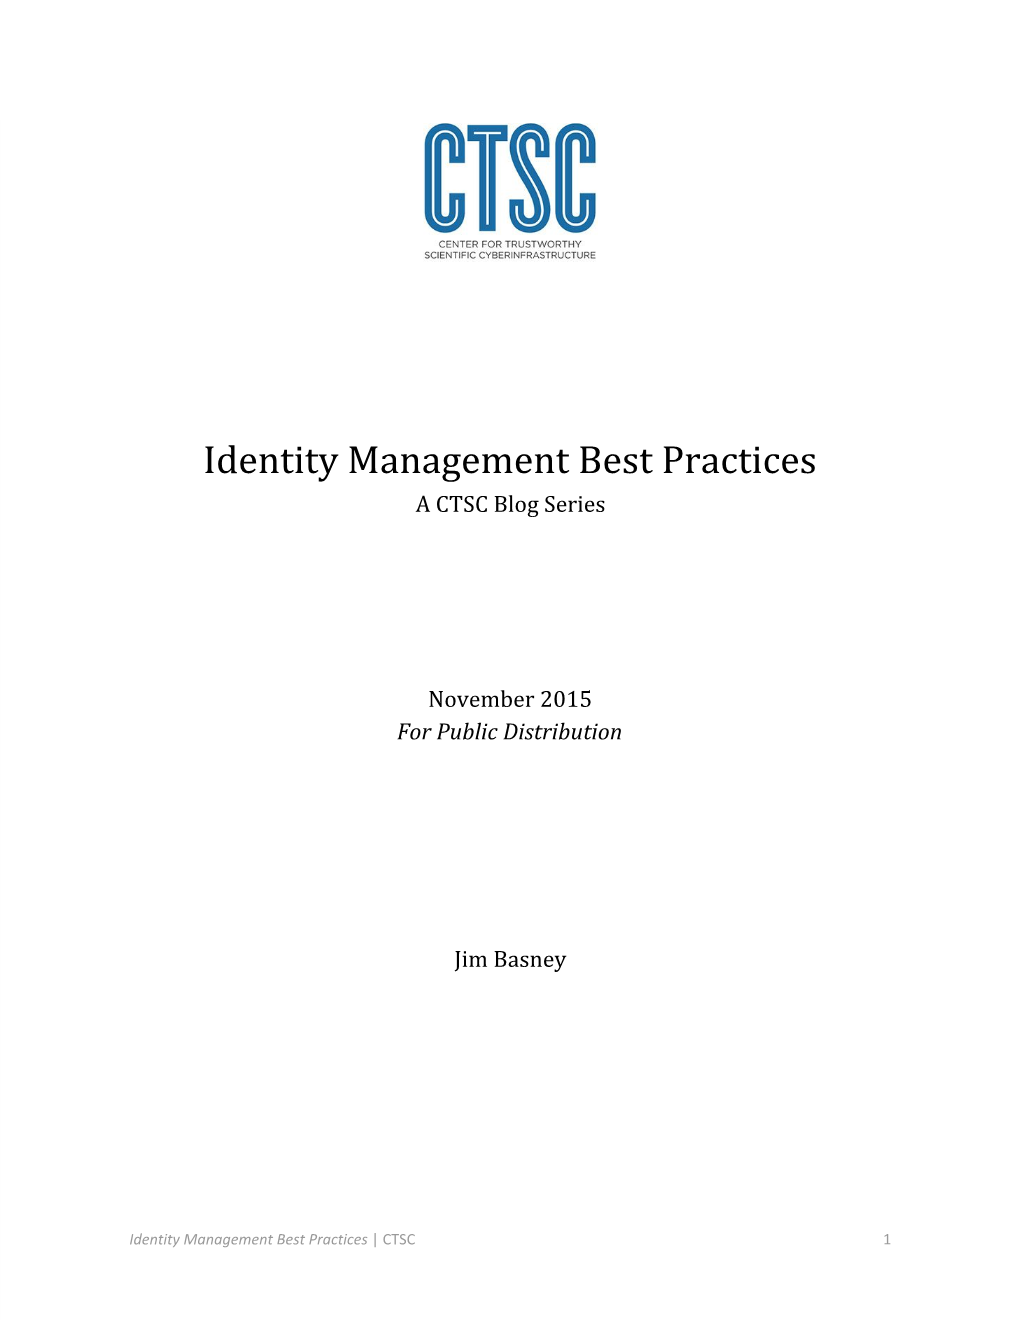 Identity Management Best Practices a CTSC Blog Series